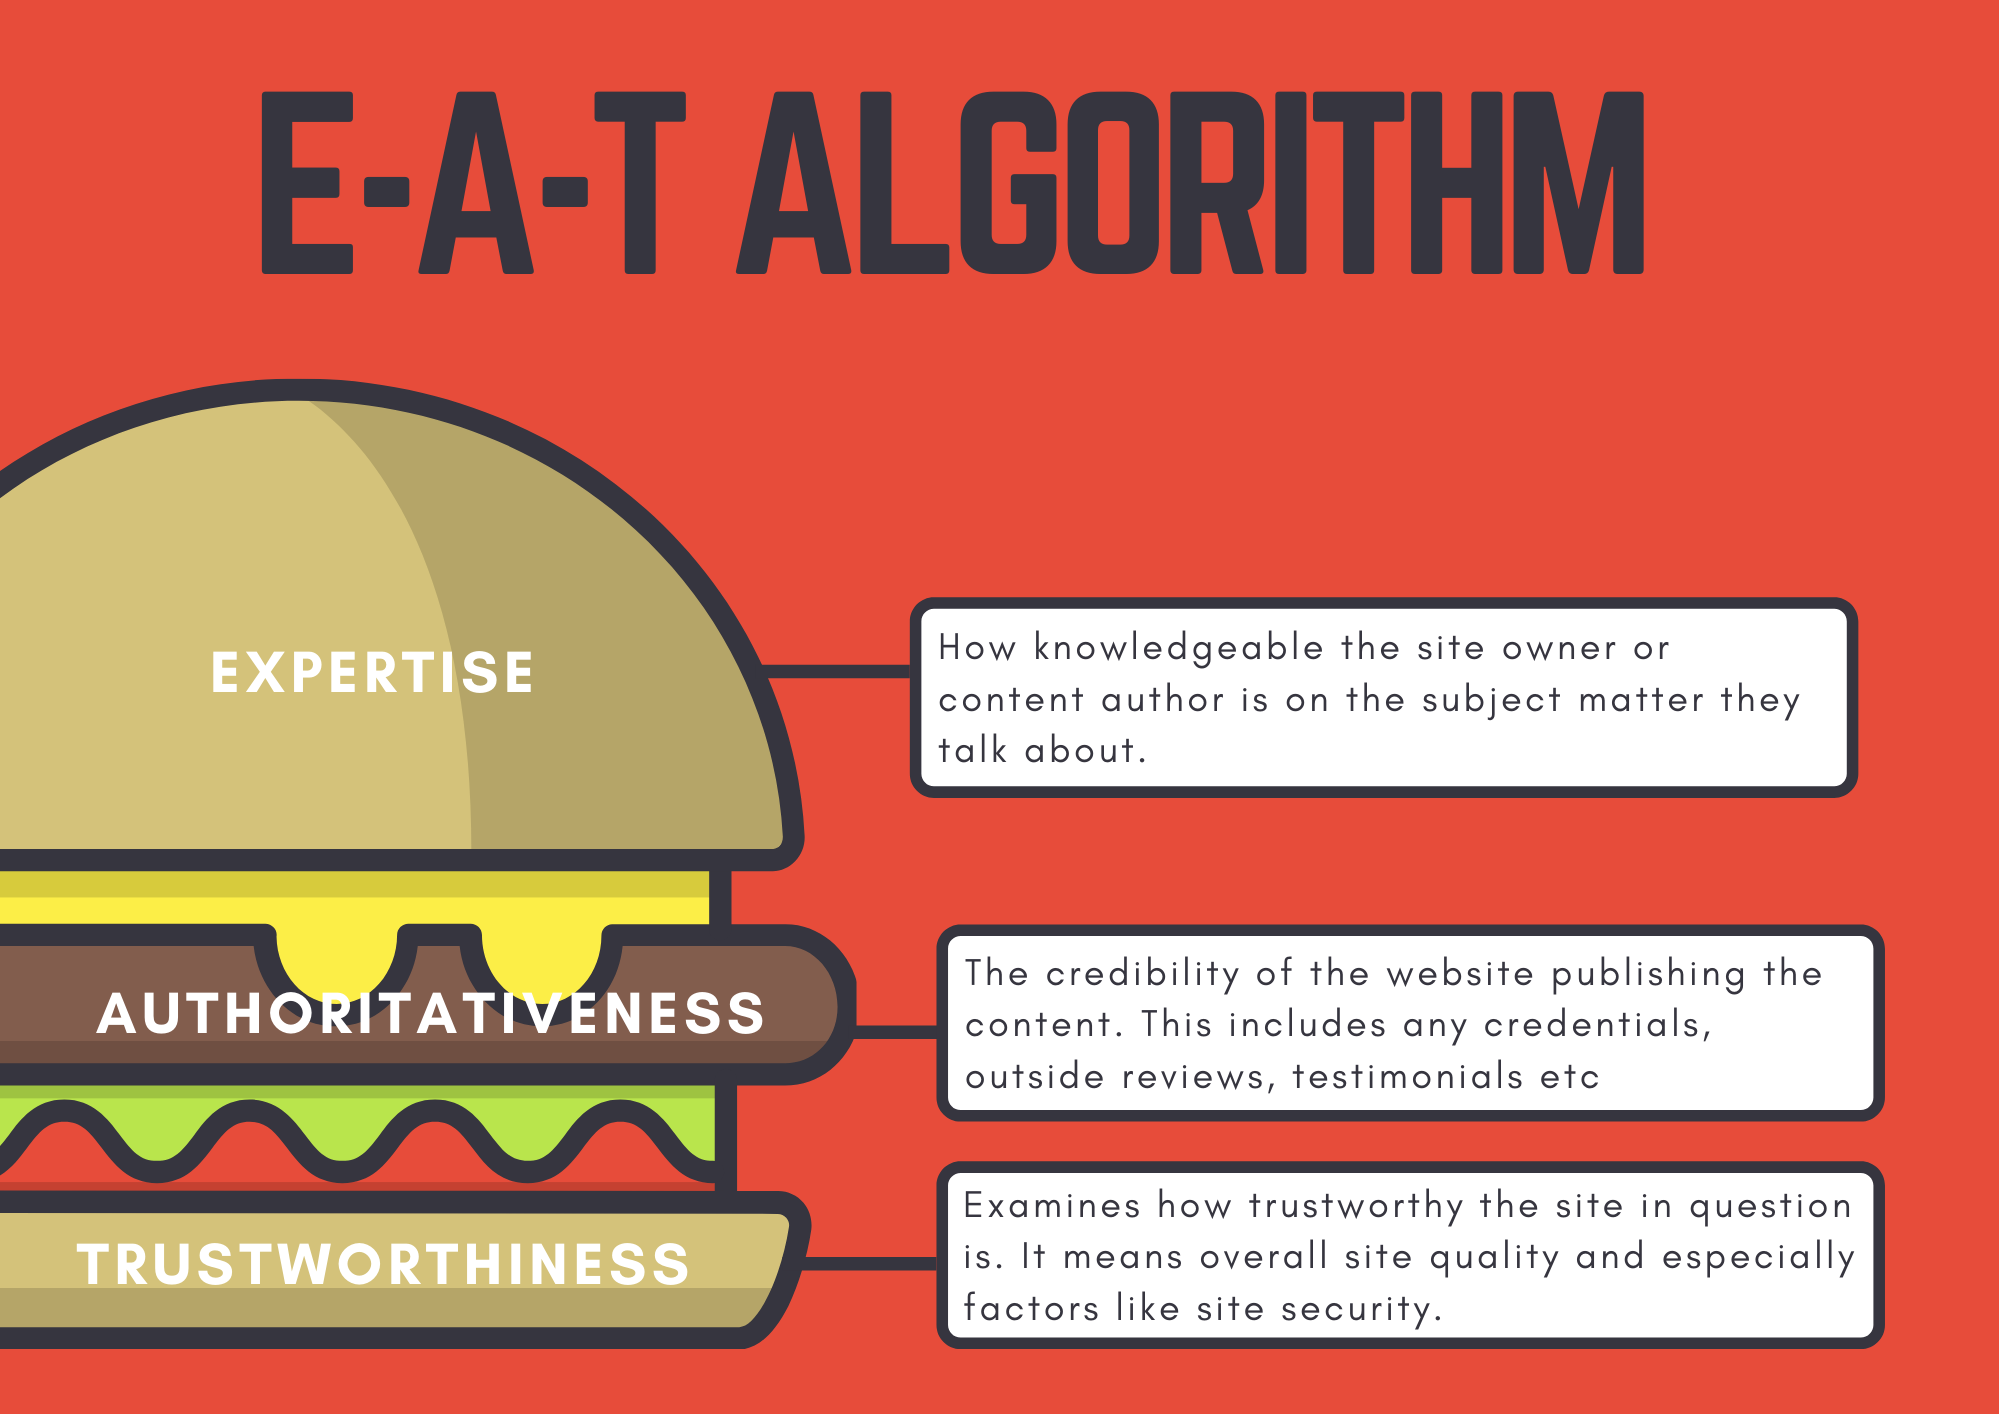 EAT Algorithm for healthcare marketing trends